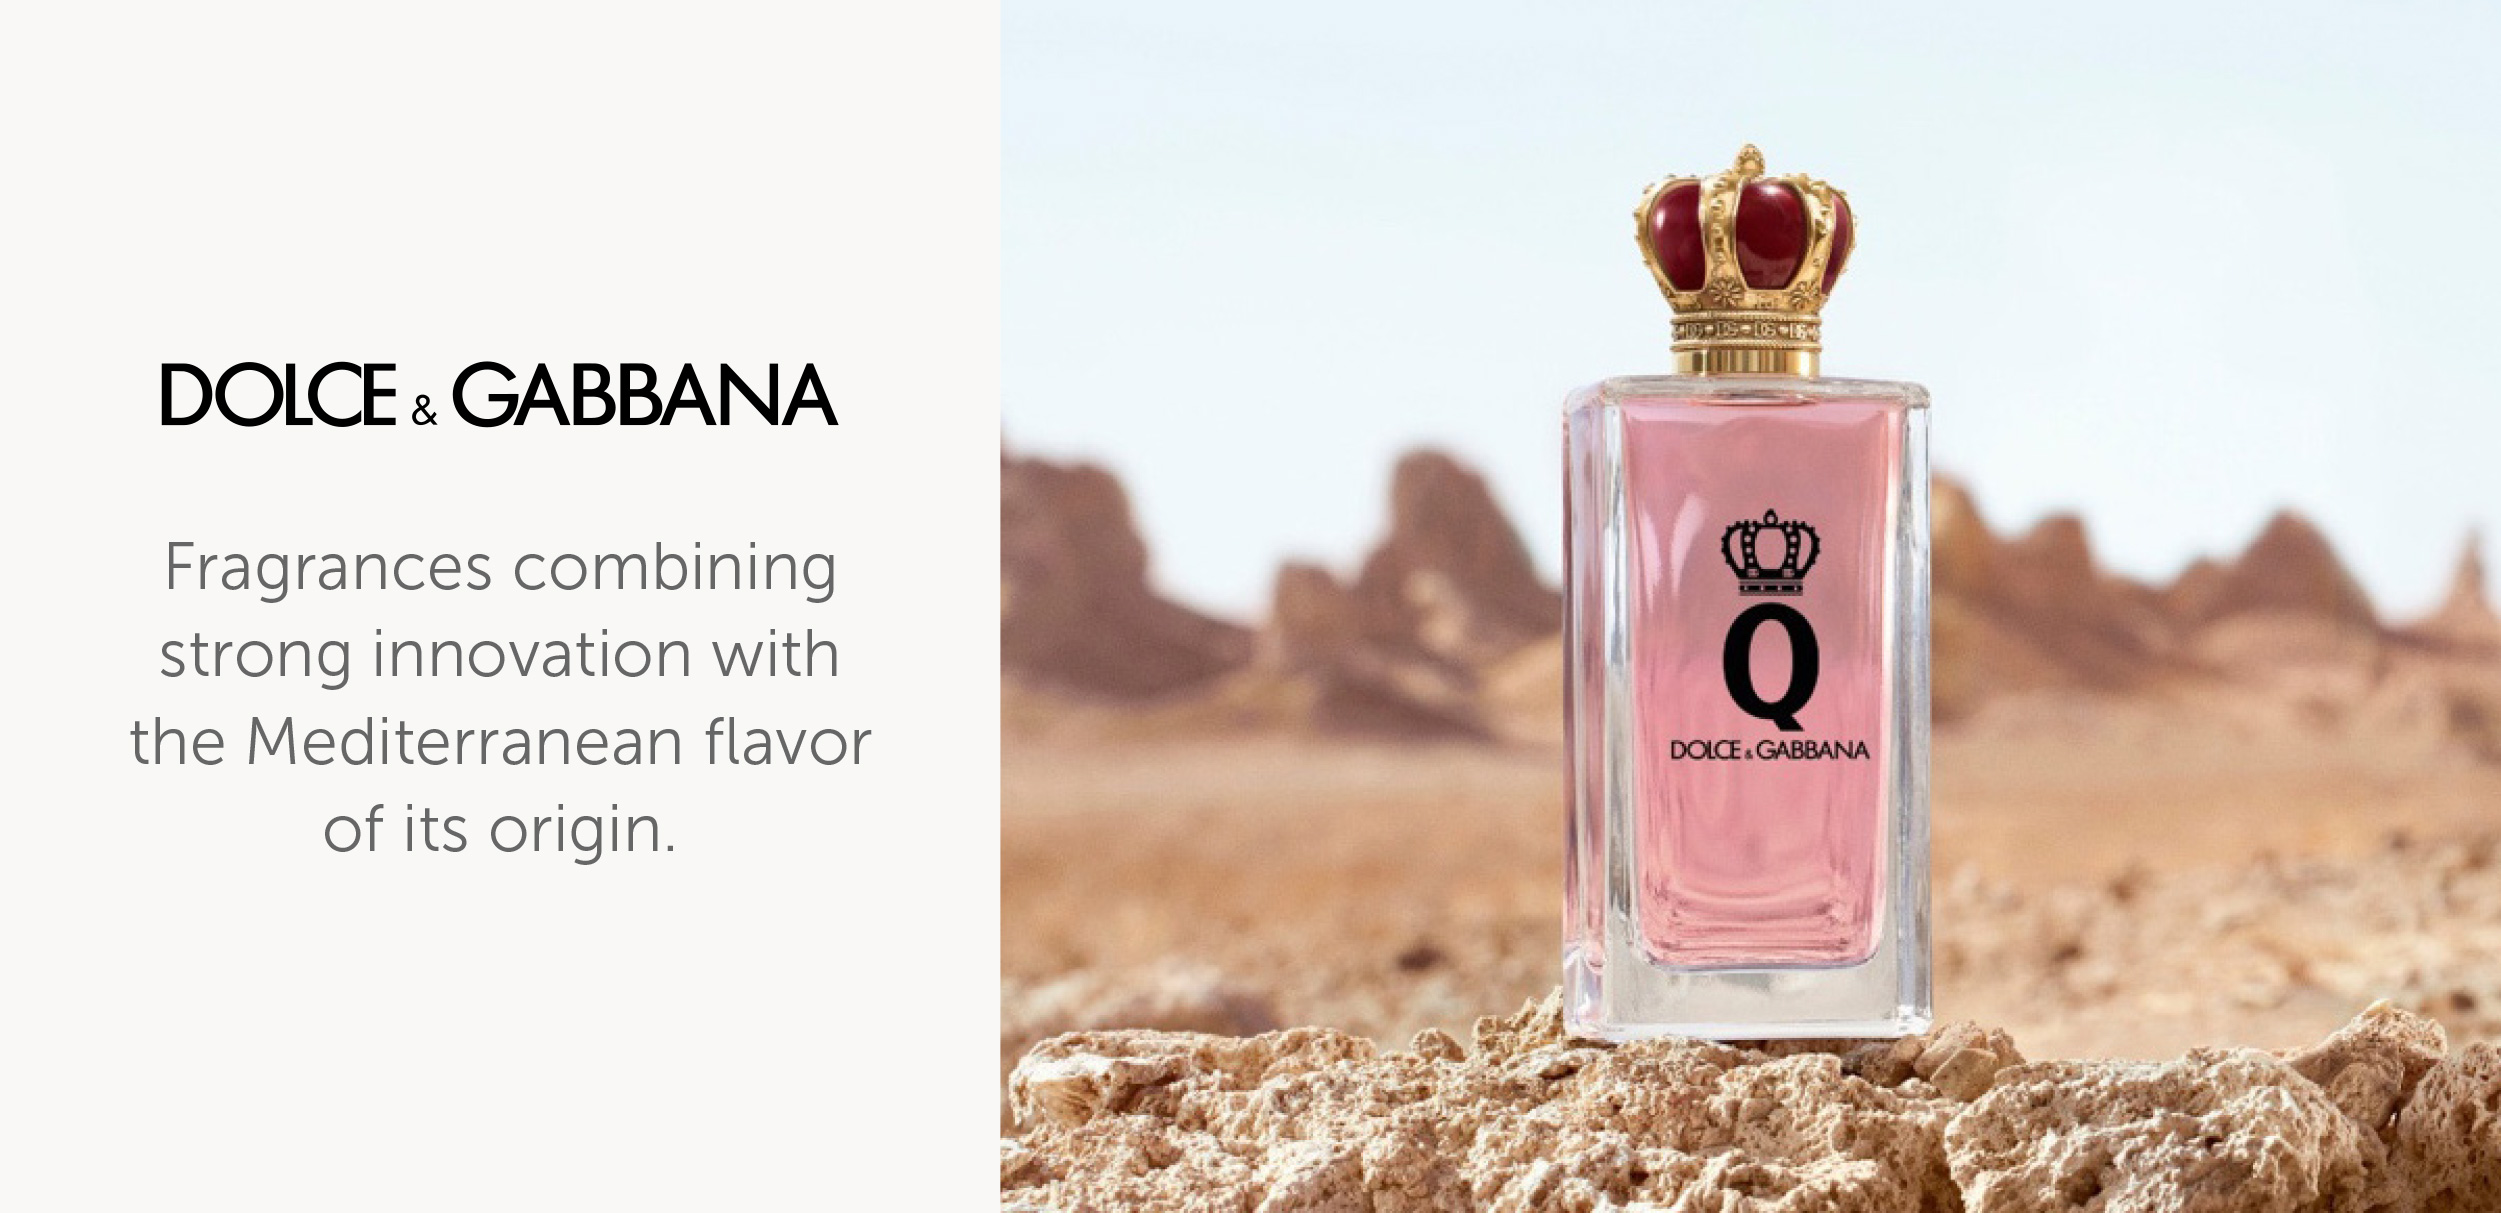 The Dolce & Gabbana Fragrance and Perfume range